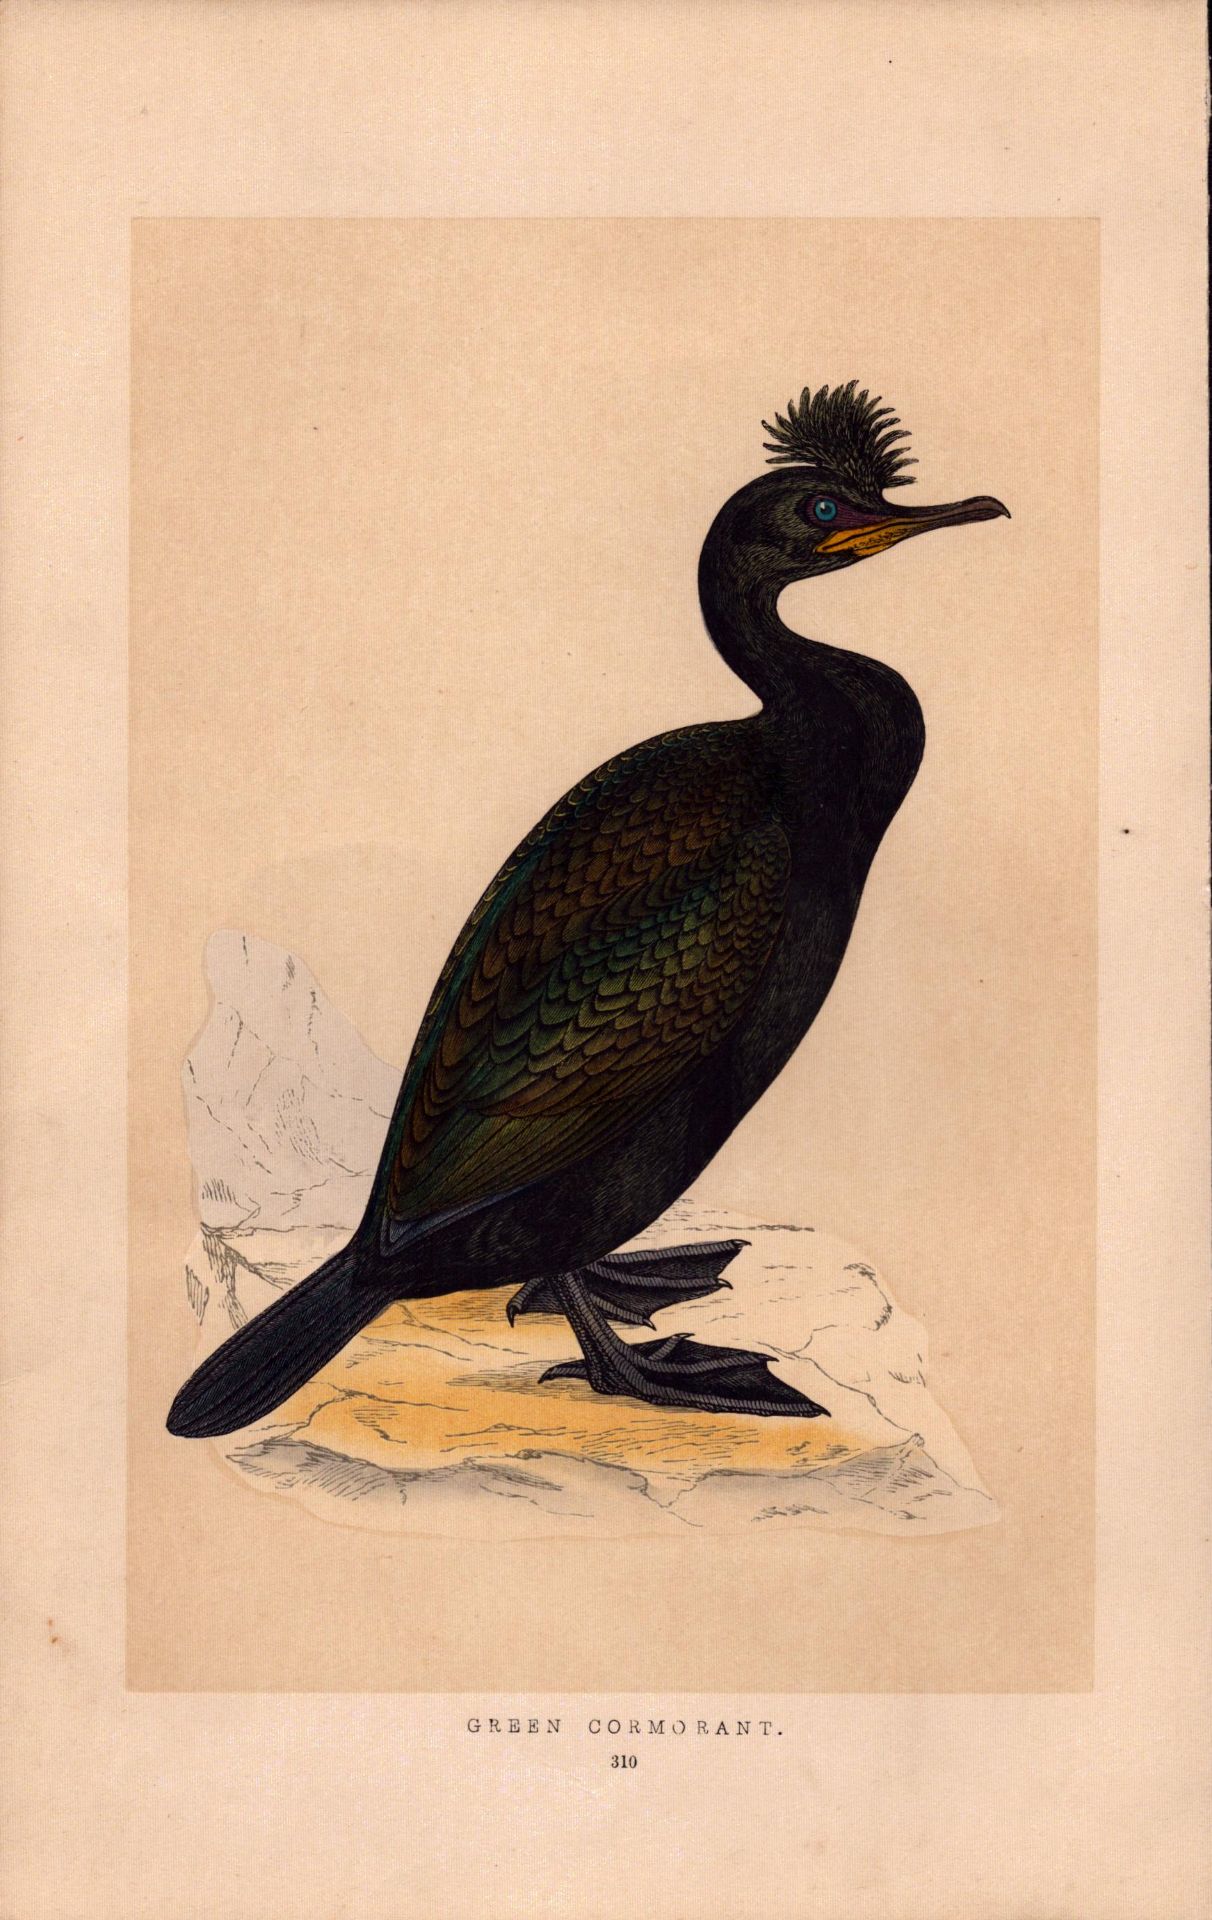 Green Cormorant Rev Morris 1857 Antique History of British Birds Engraving.